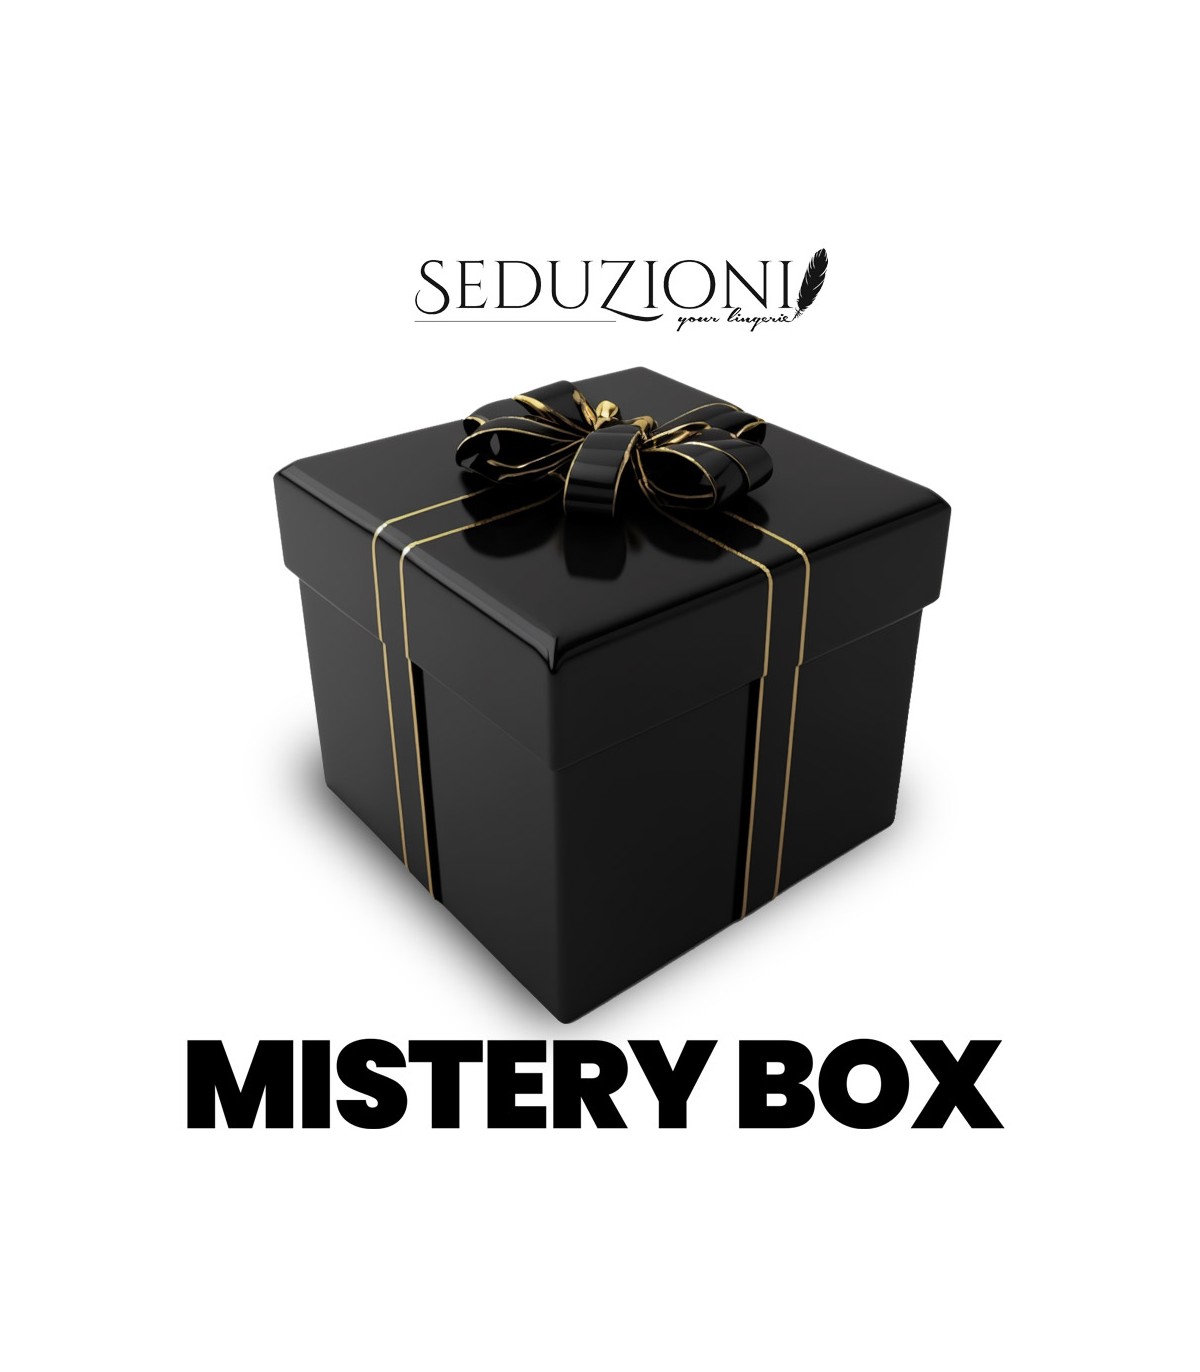 Seduzioni - Mistery Box